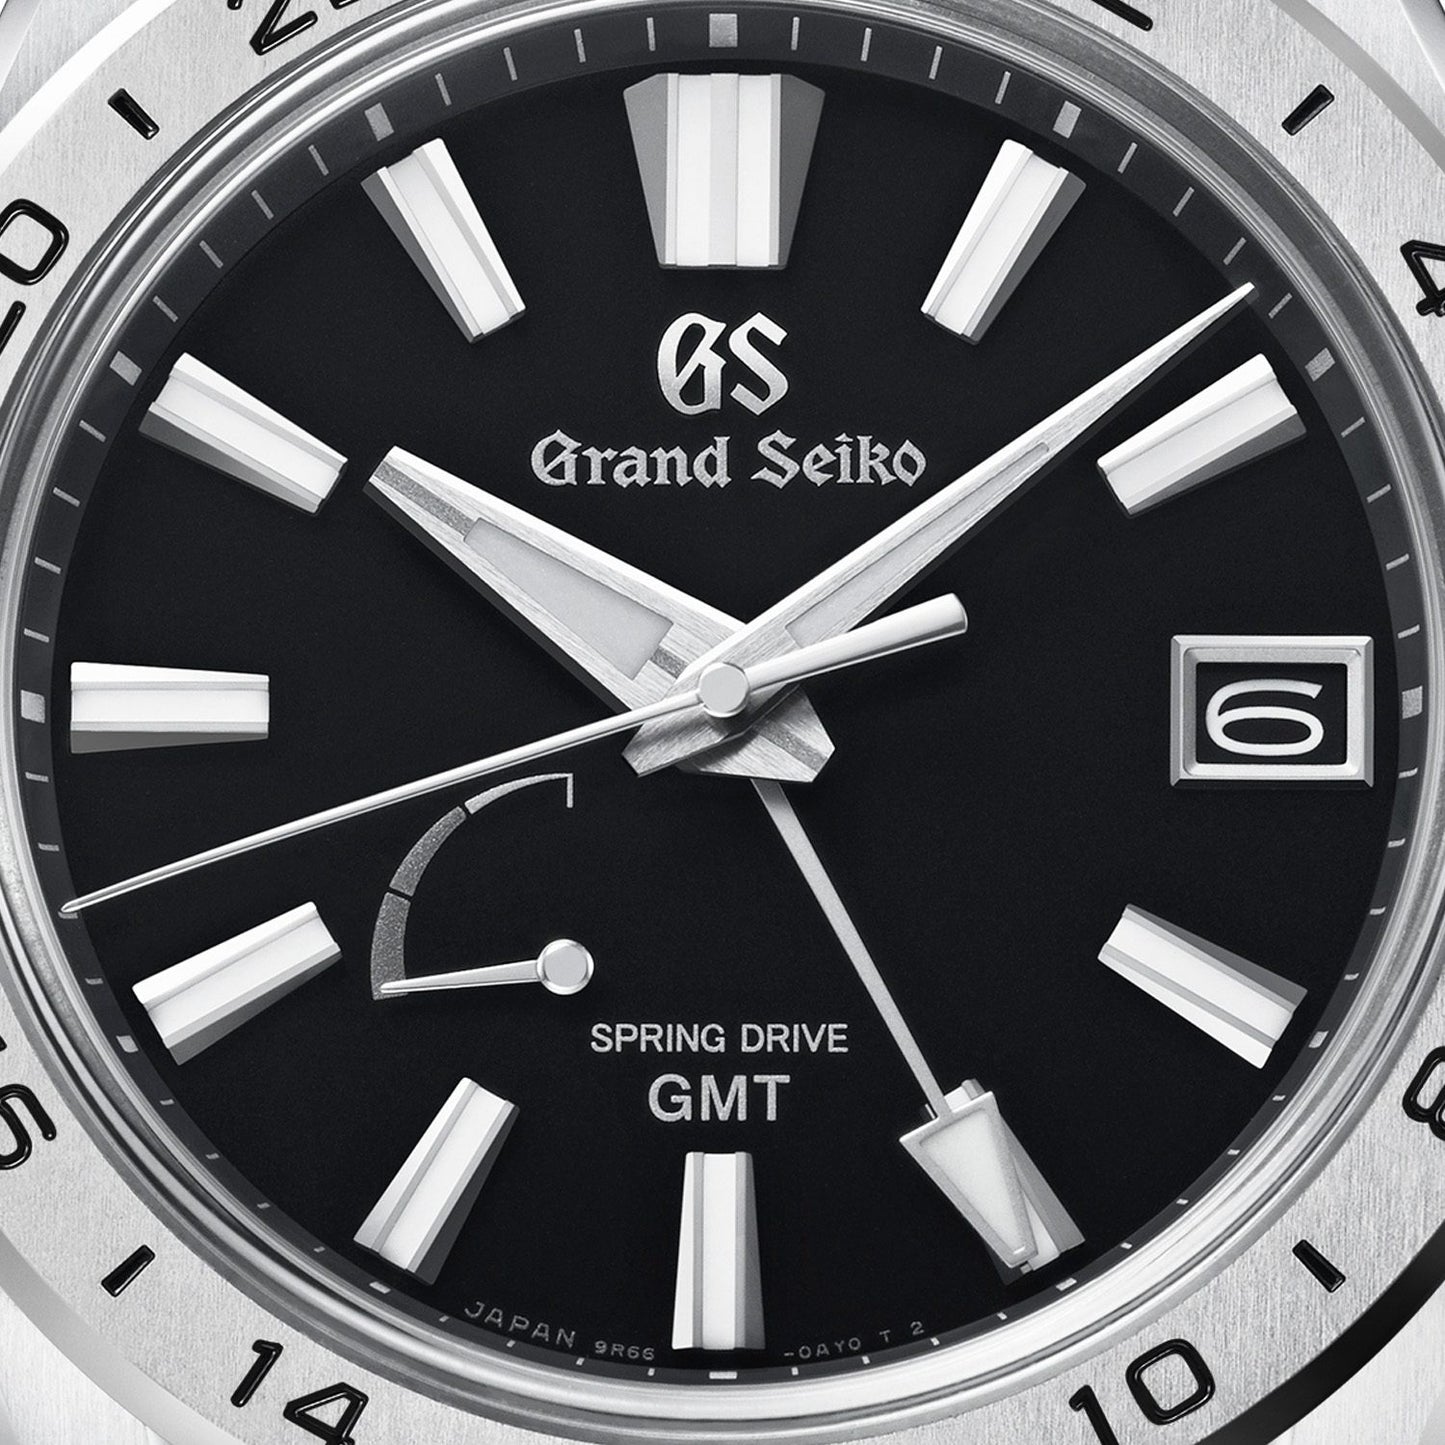 Grand Seiko Evolution 9 Spring Drive GMT Watch